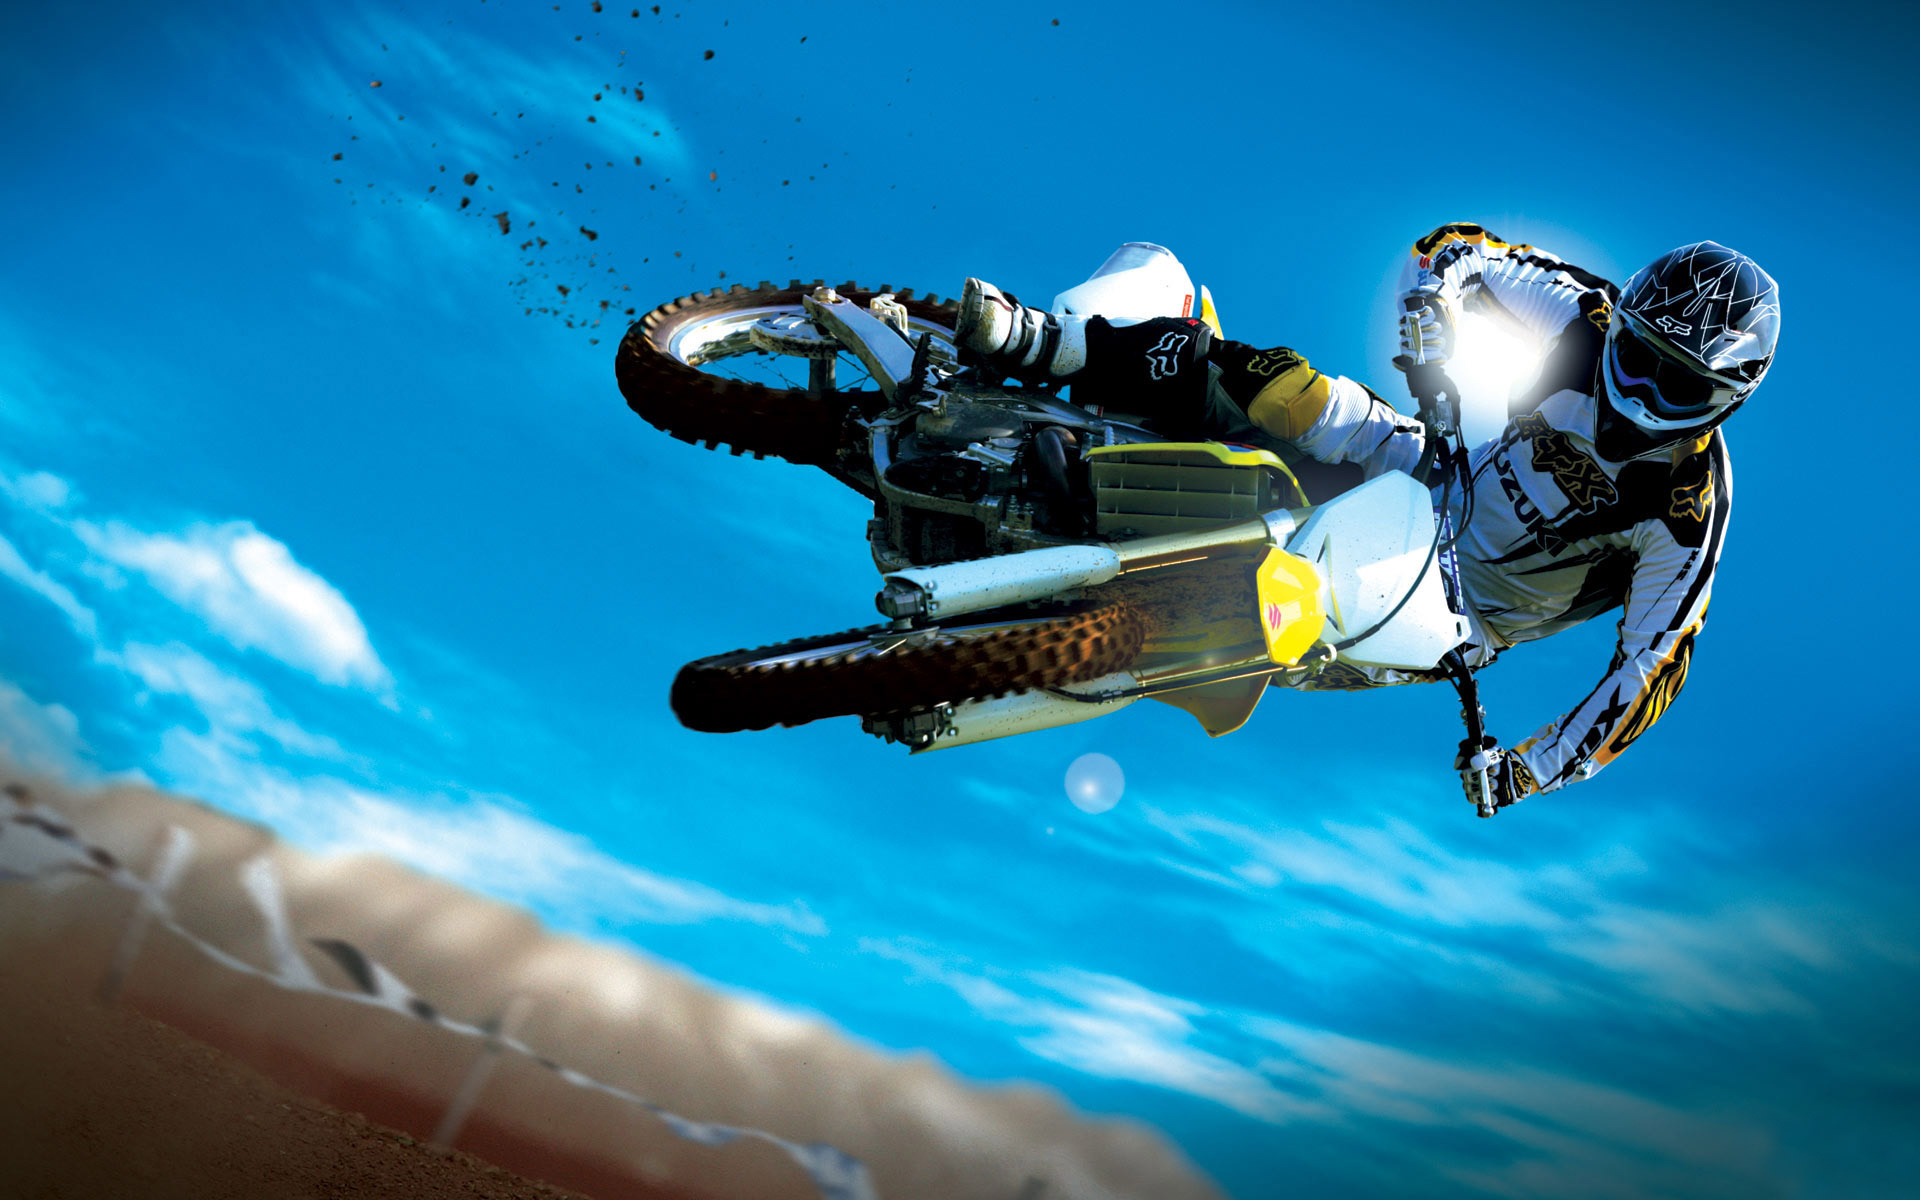 Stunt: The Dirt 2 open-world racing video game gameplay fragment, Enduro dirt bike. 1920x1200 HD Background.